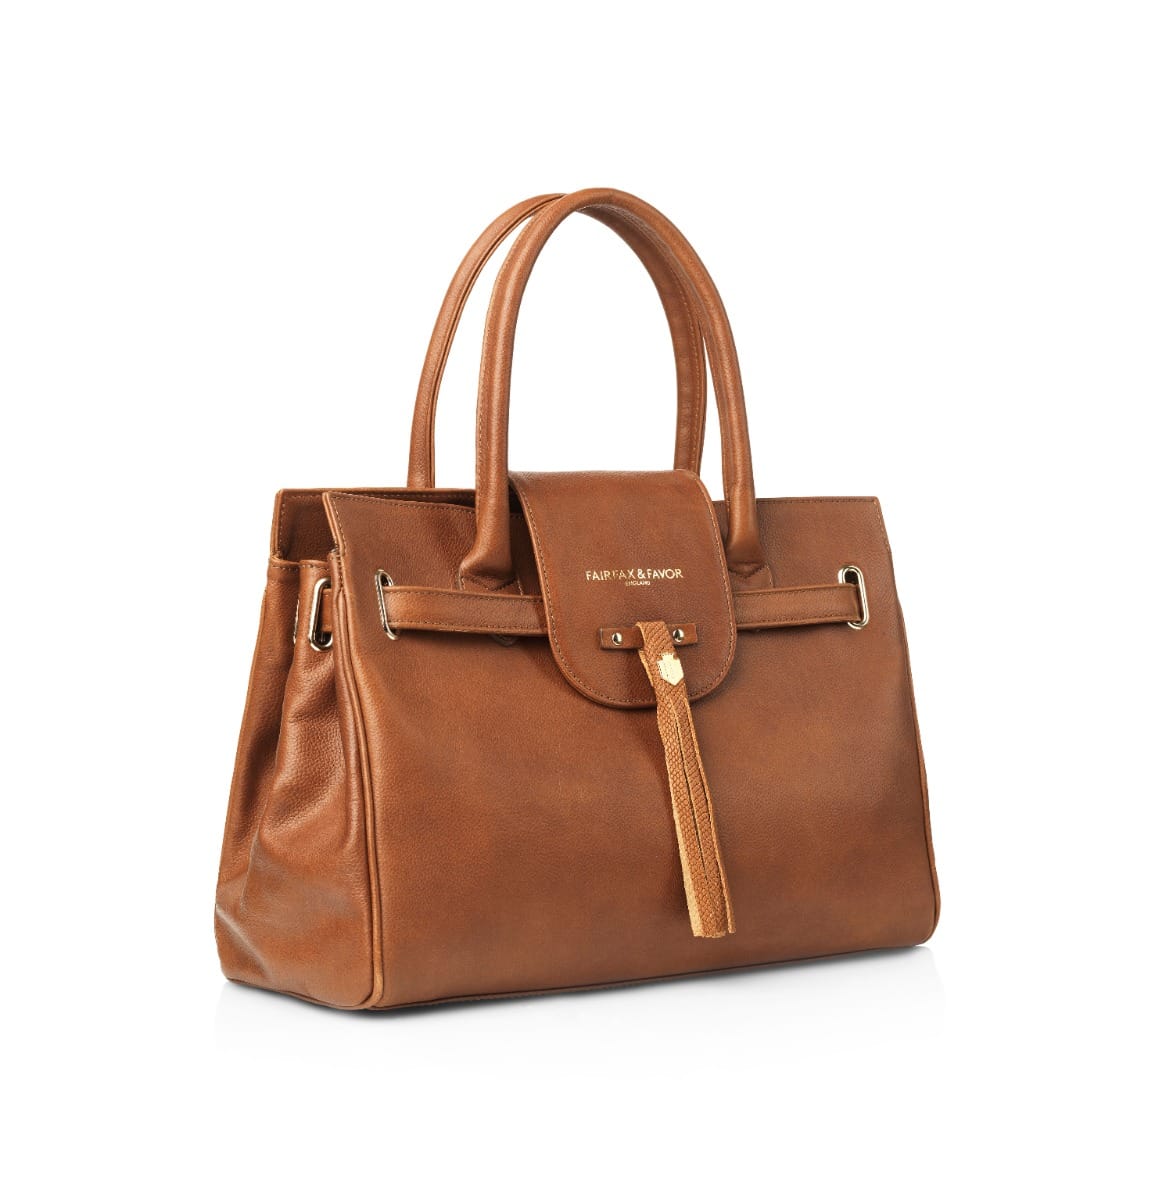 Fairfax & Favor Ladies Windsor Handbag